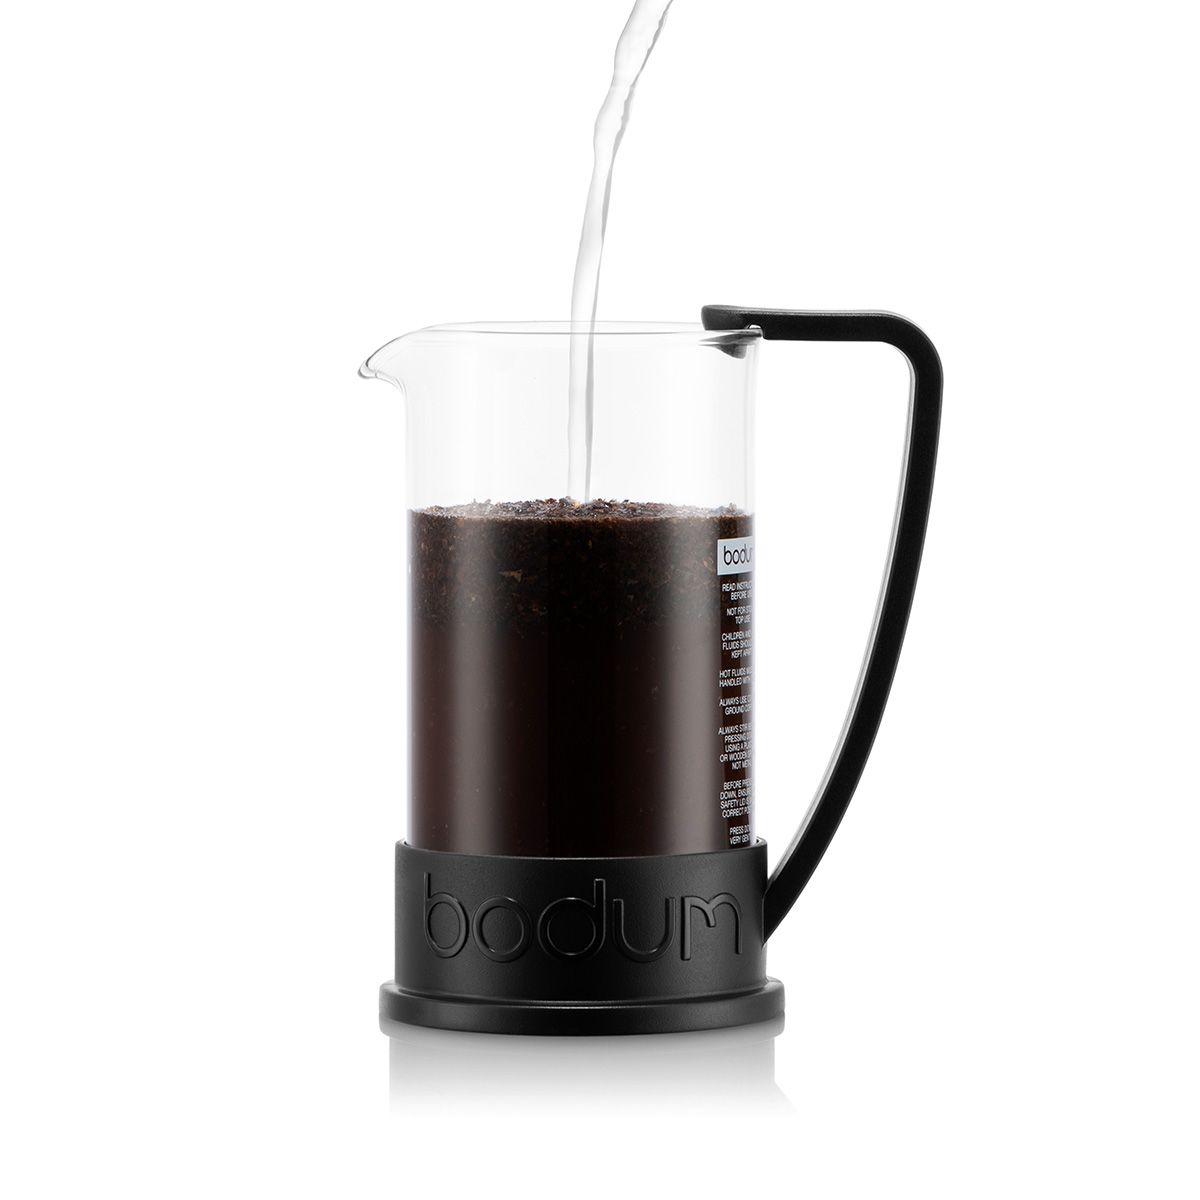 Bodum Bean Cold Brew Coffee Maker 12 Cup / 51oz - White